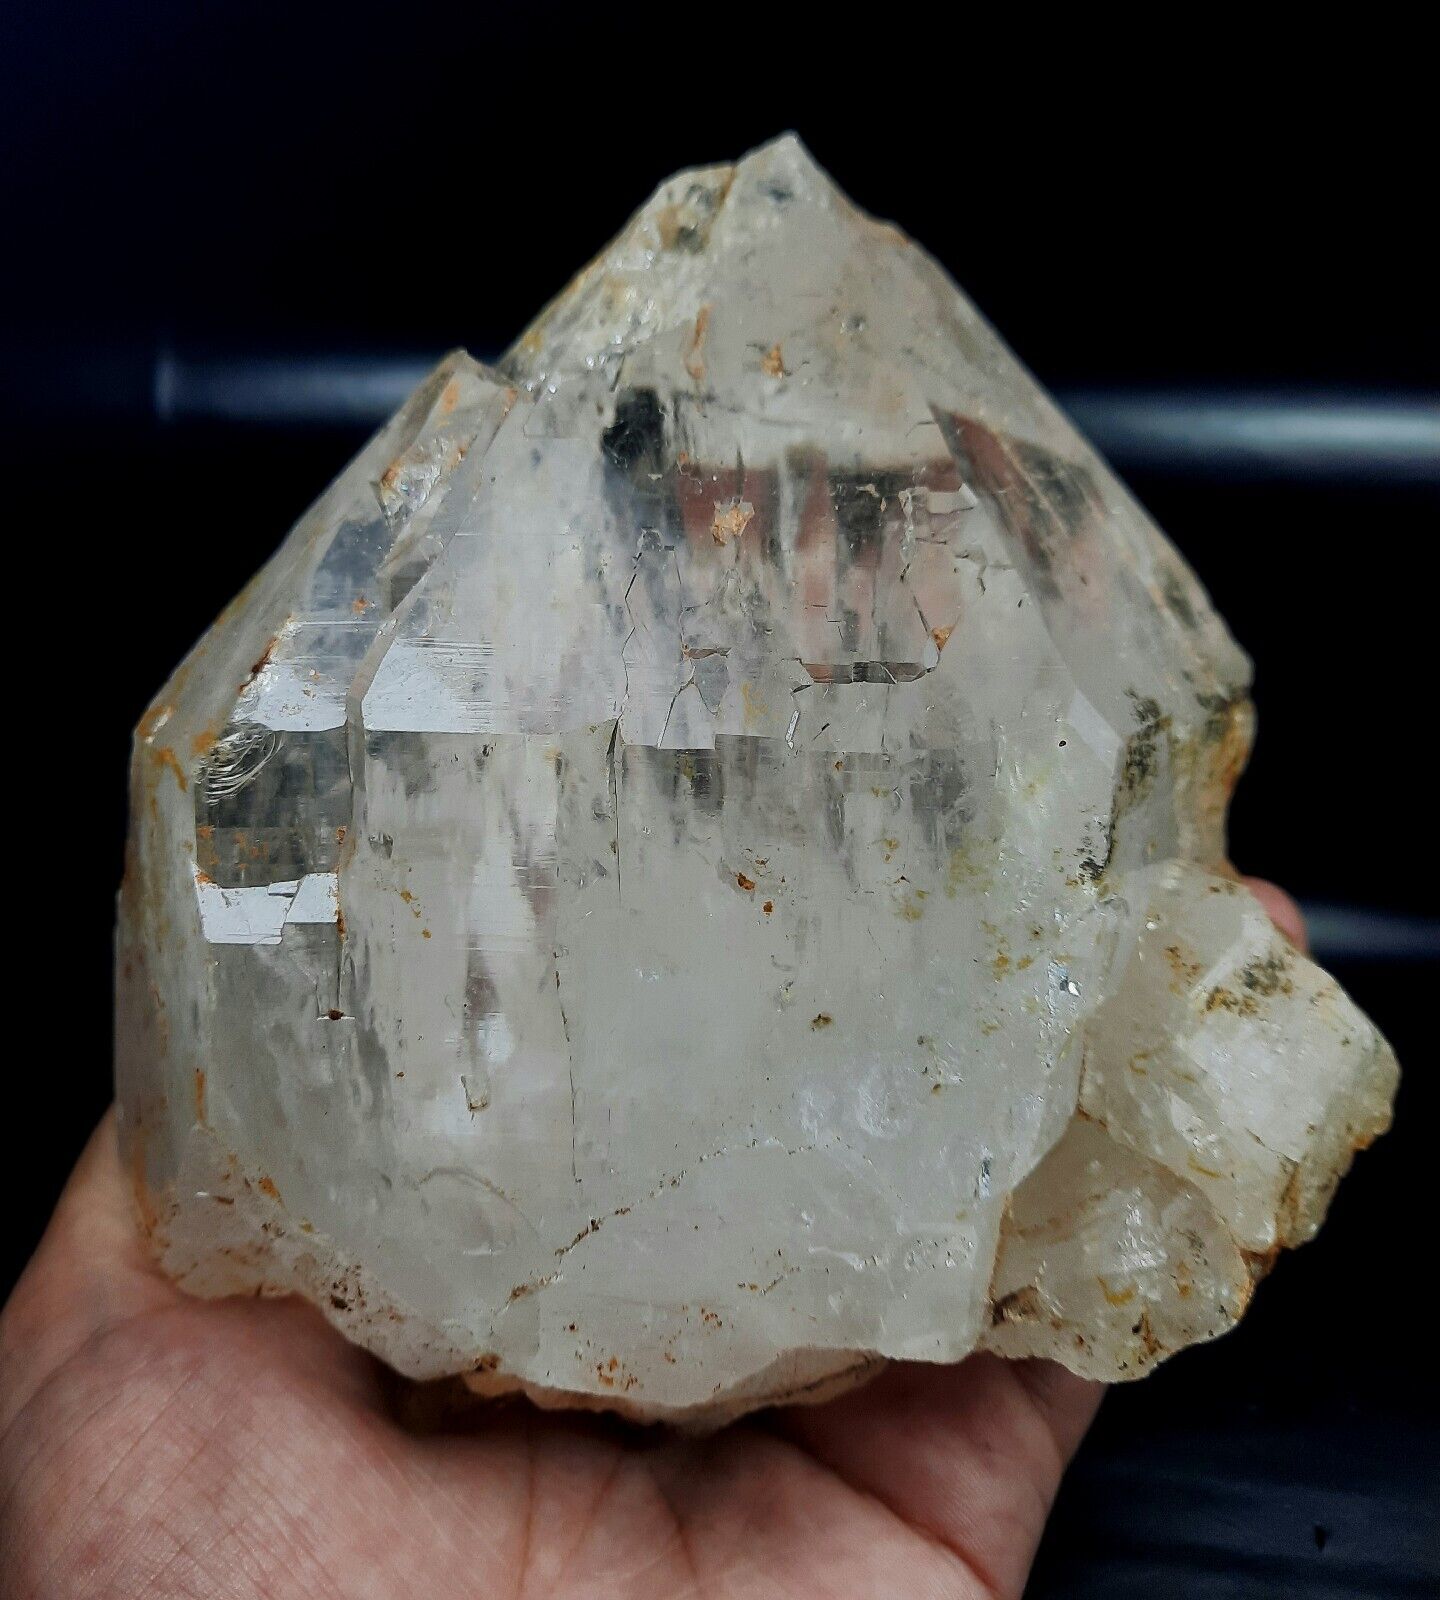 Etched Quartz Large size crystal, interesting formation - Pakistan, 1245 grams.